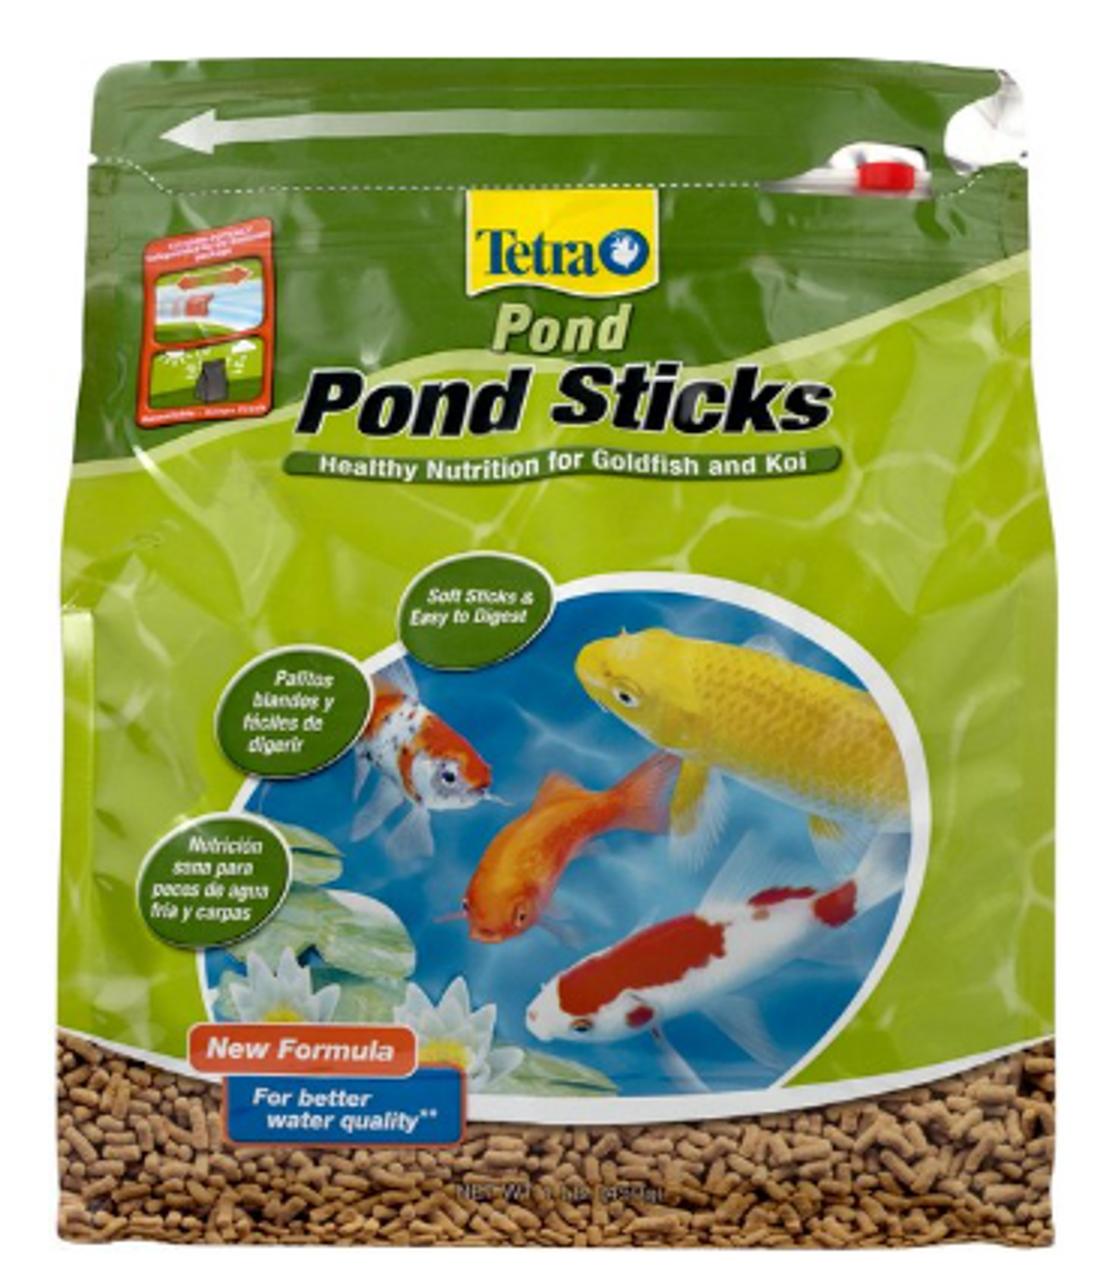 Tetra Pond Koi Vibrance Color Enhancing Sticks Koi & Goldfish Food